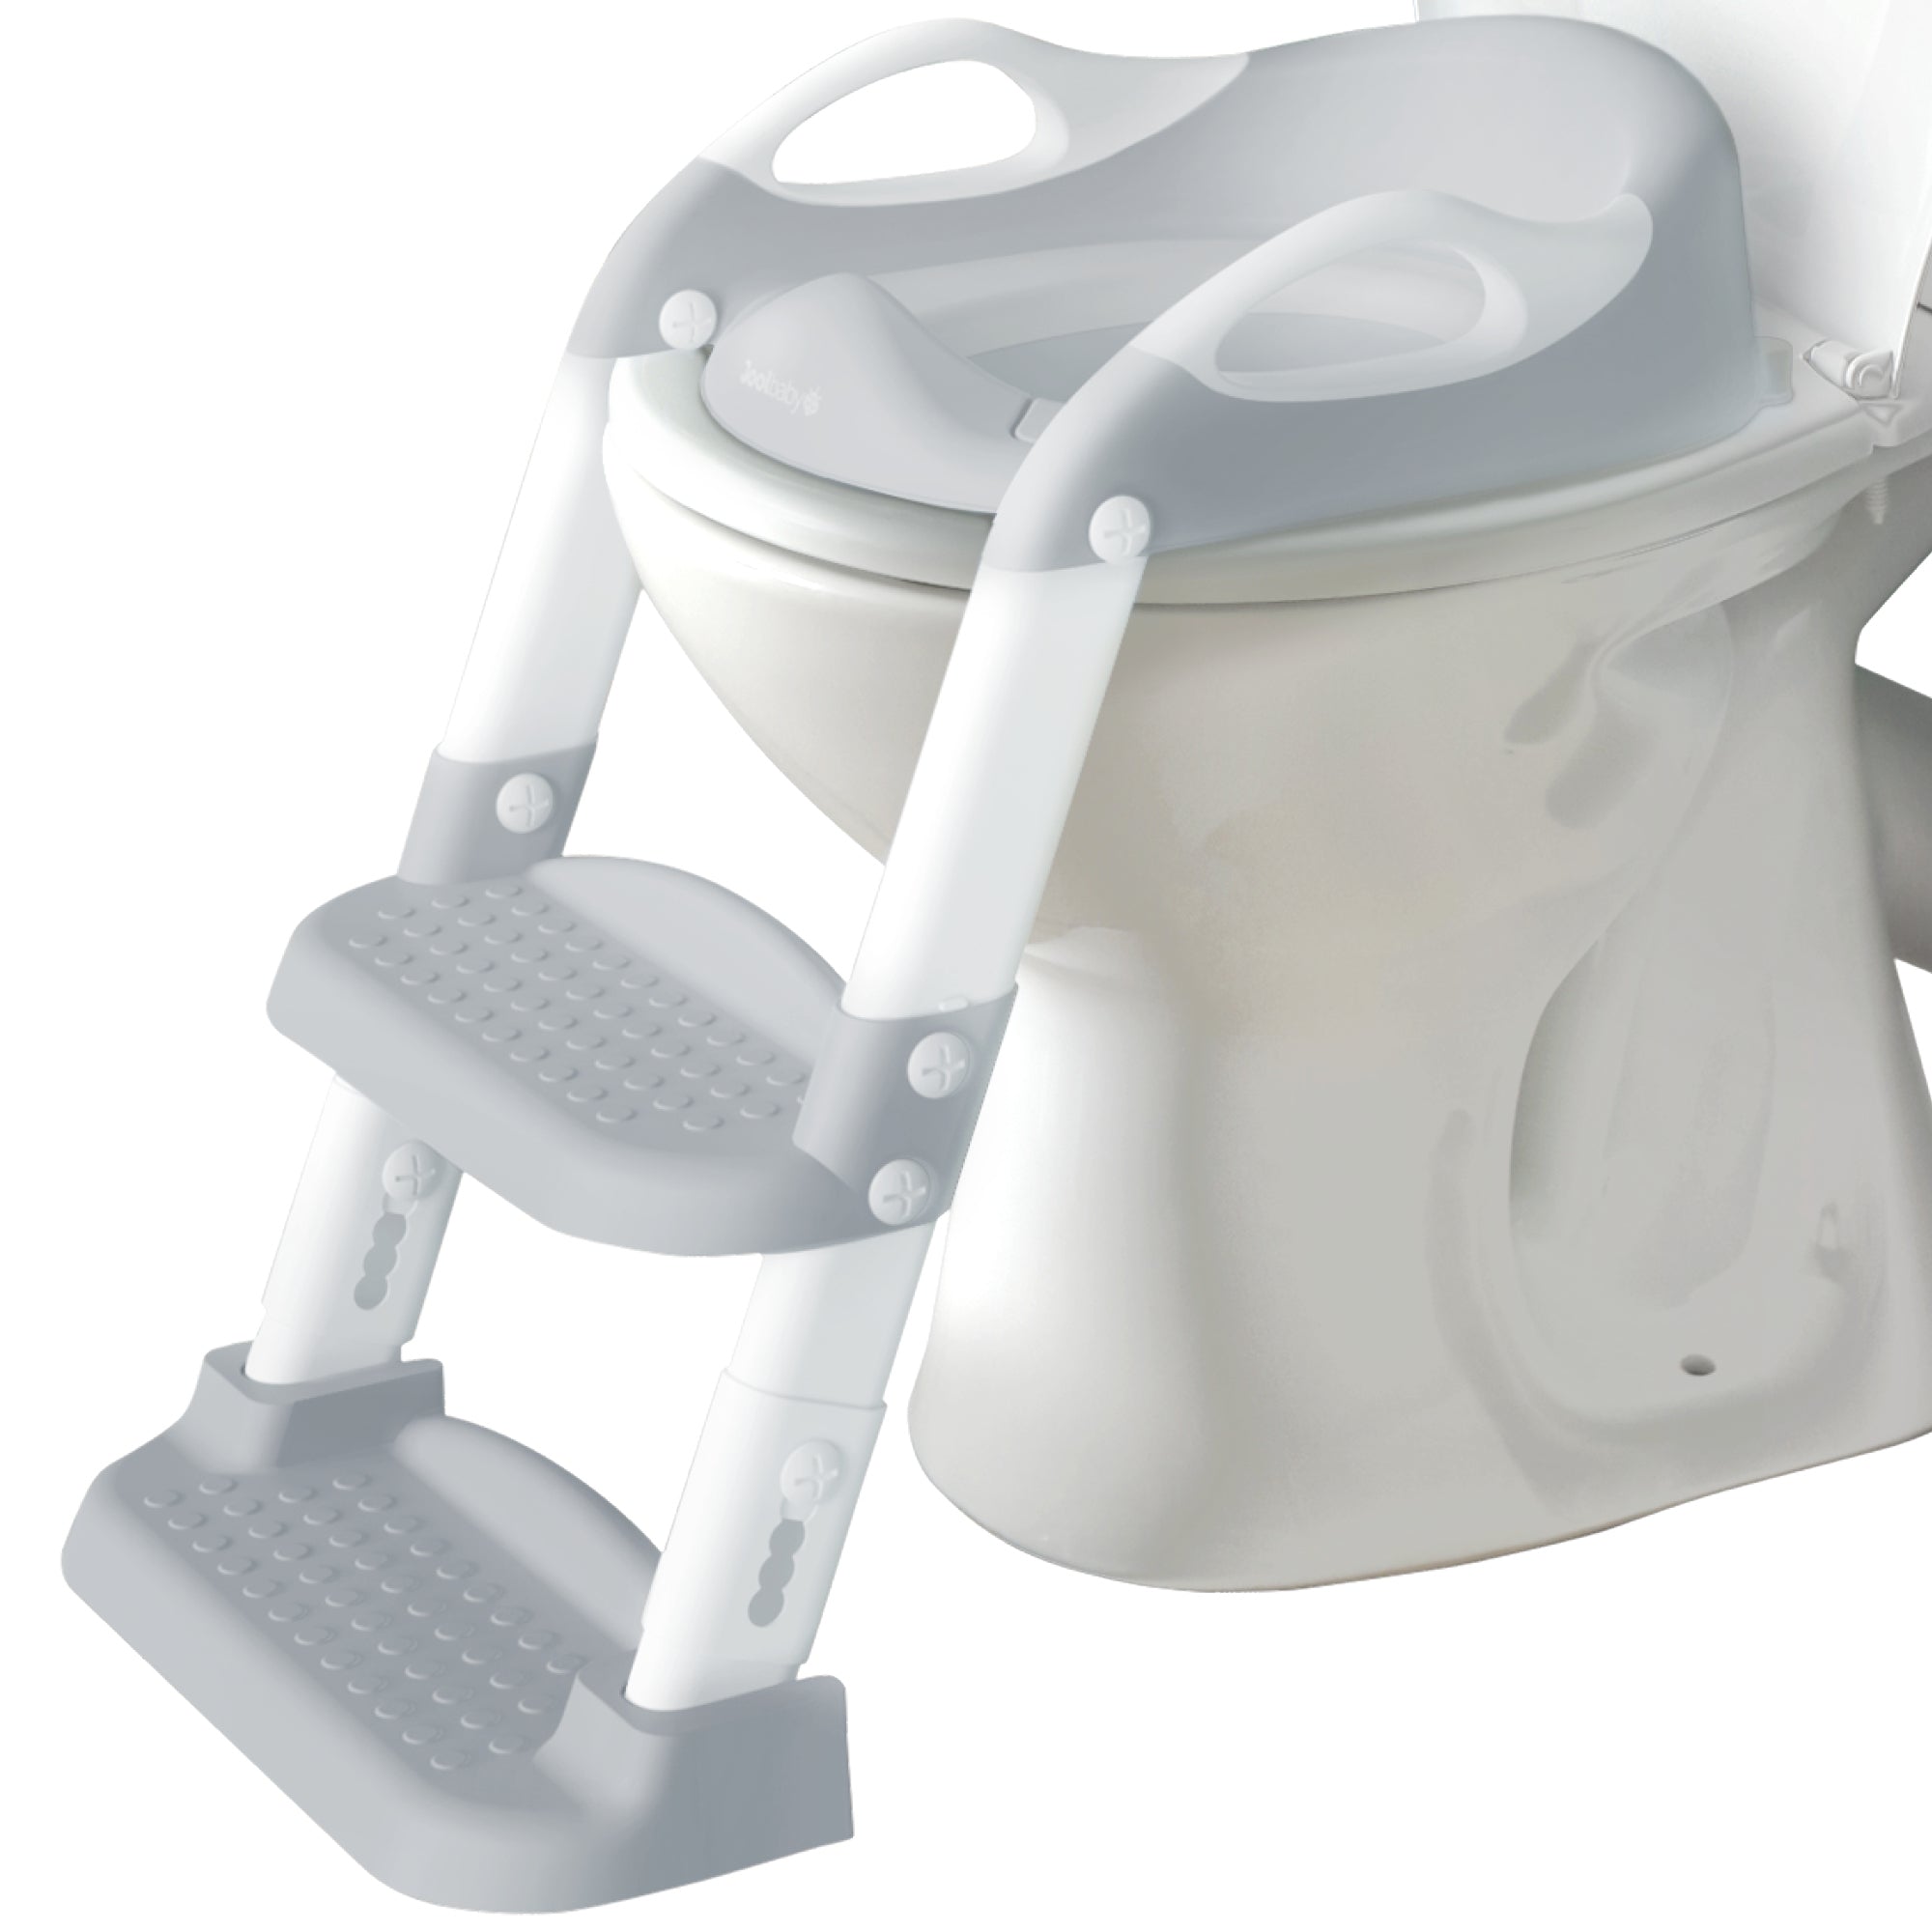 BEABA Potty Training Seat, Easy to Position and Anti-Slip, Hygienic Design  w/Splash Guard, Toddler Potty Seat for Toilet, Potty Training Toilet Seat